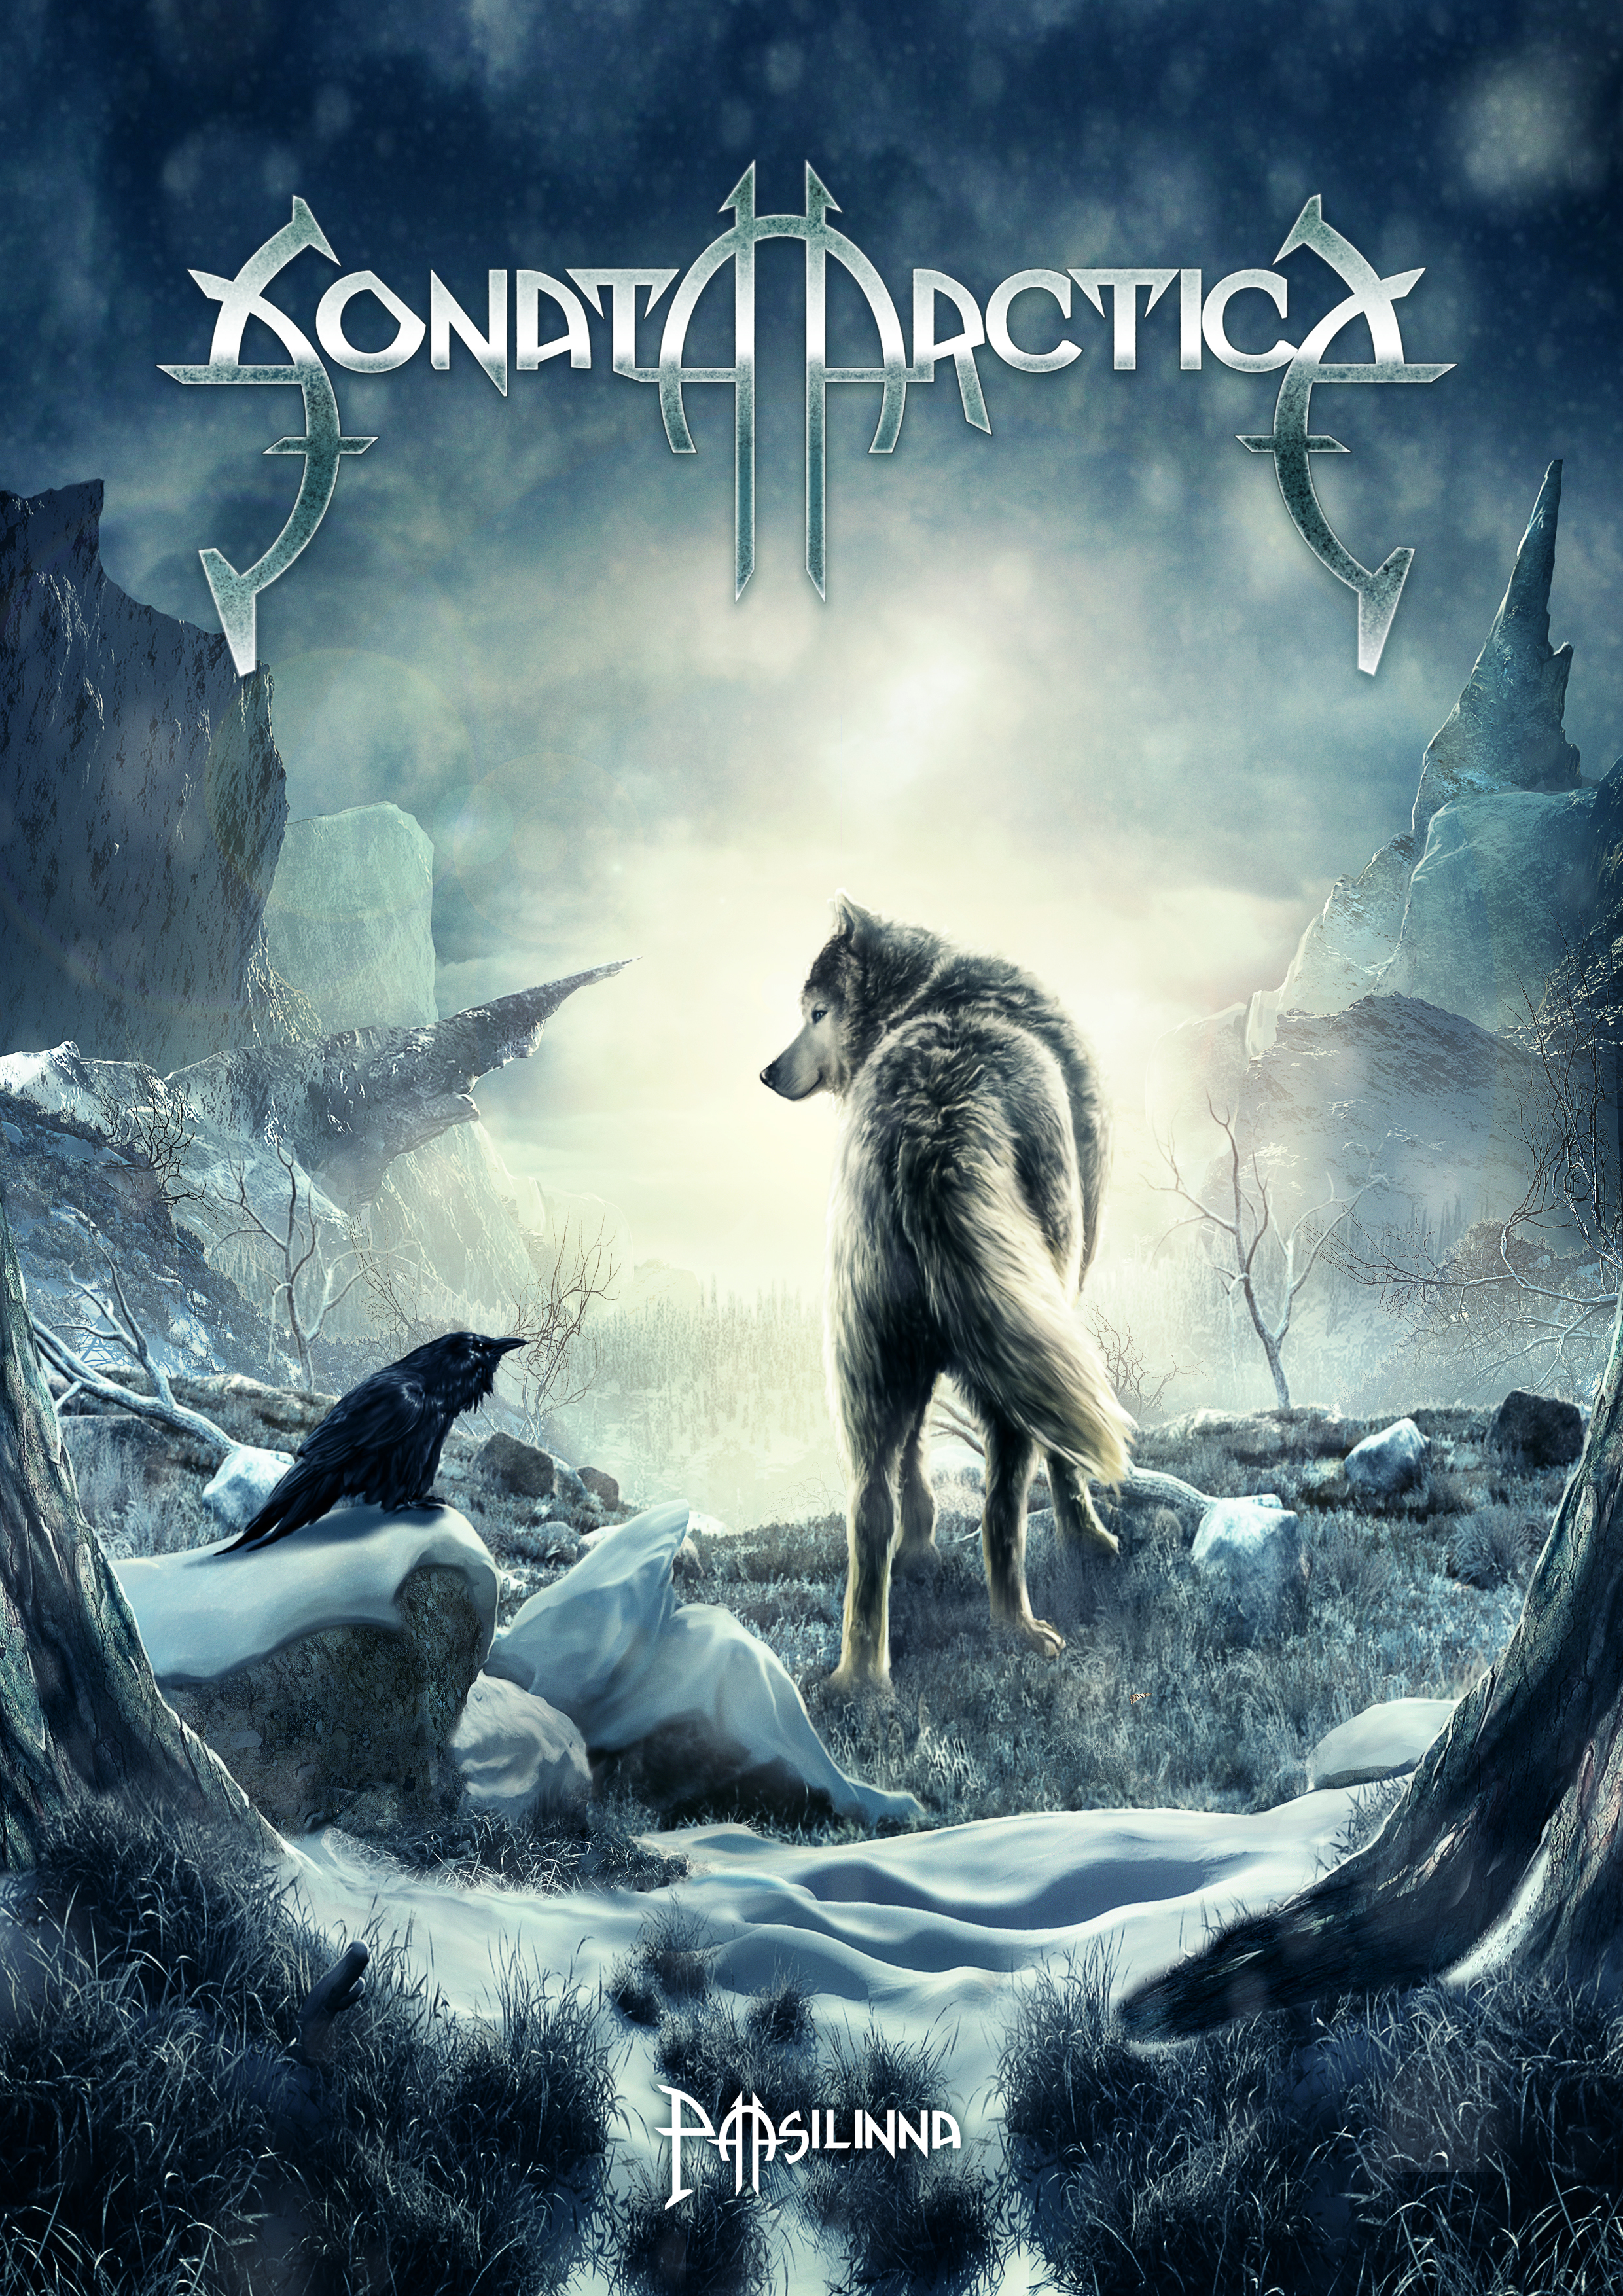 Sonata Arctica Kirja Kertoo Tony Kakon, Pienenä Kerrostalopihan - Sonata Arctica , HD Wallpaper & Backgrounds